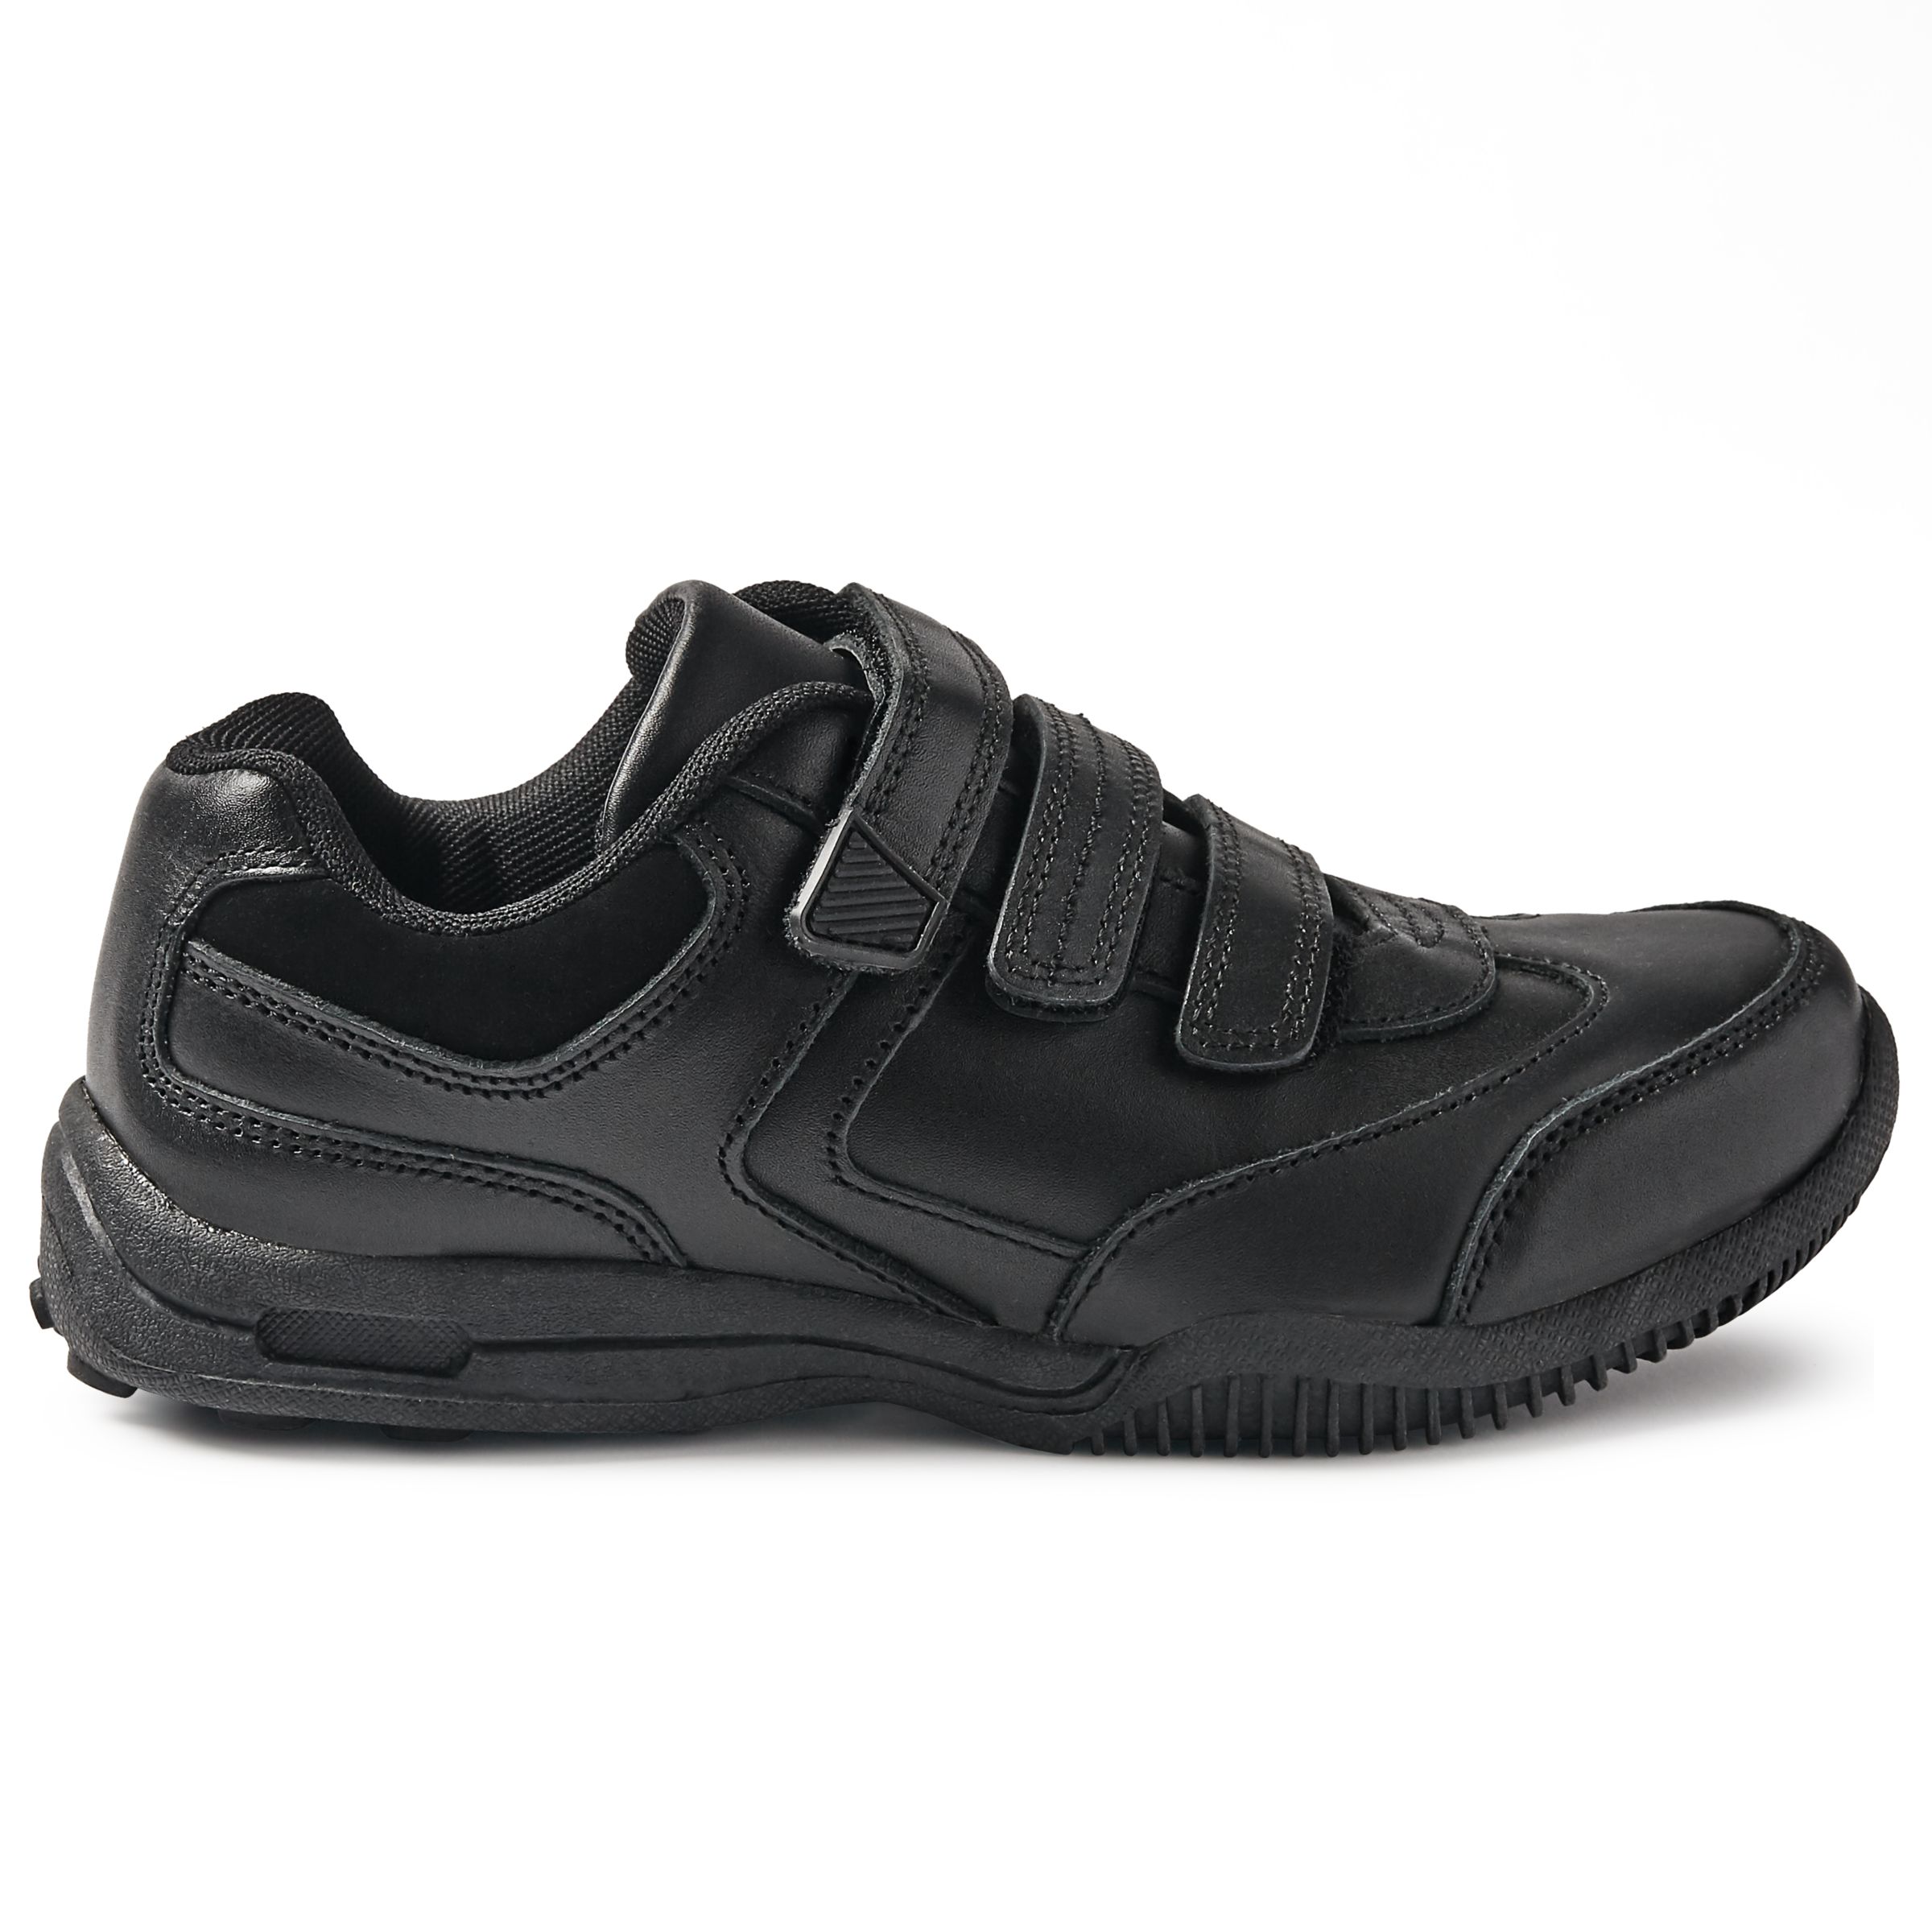 John Lewis & Partners Children's Suffolk Triple Riptape Shoes, Black